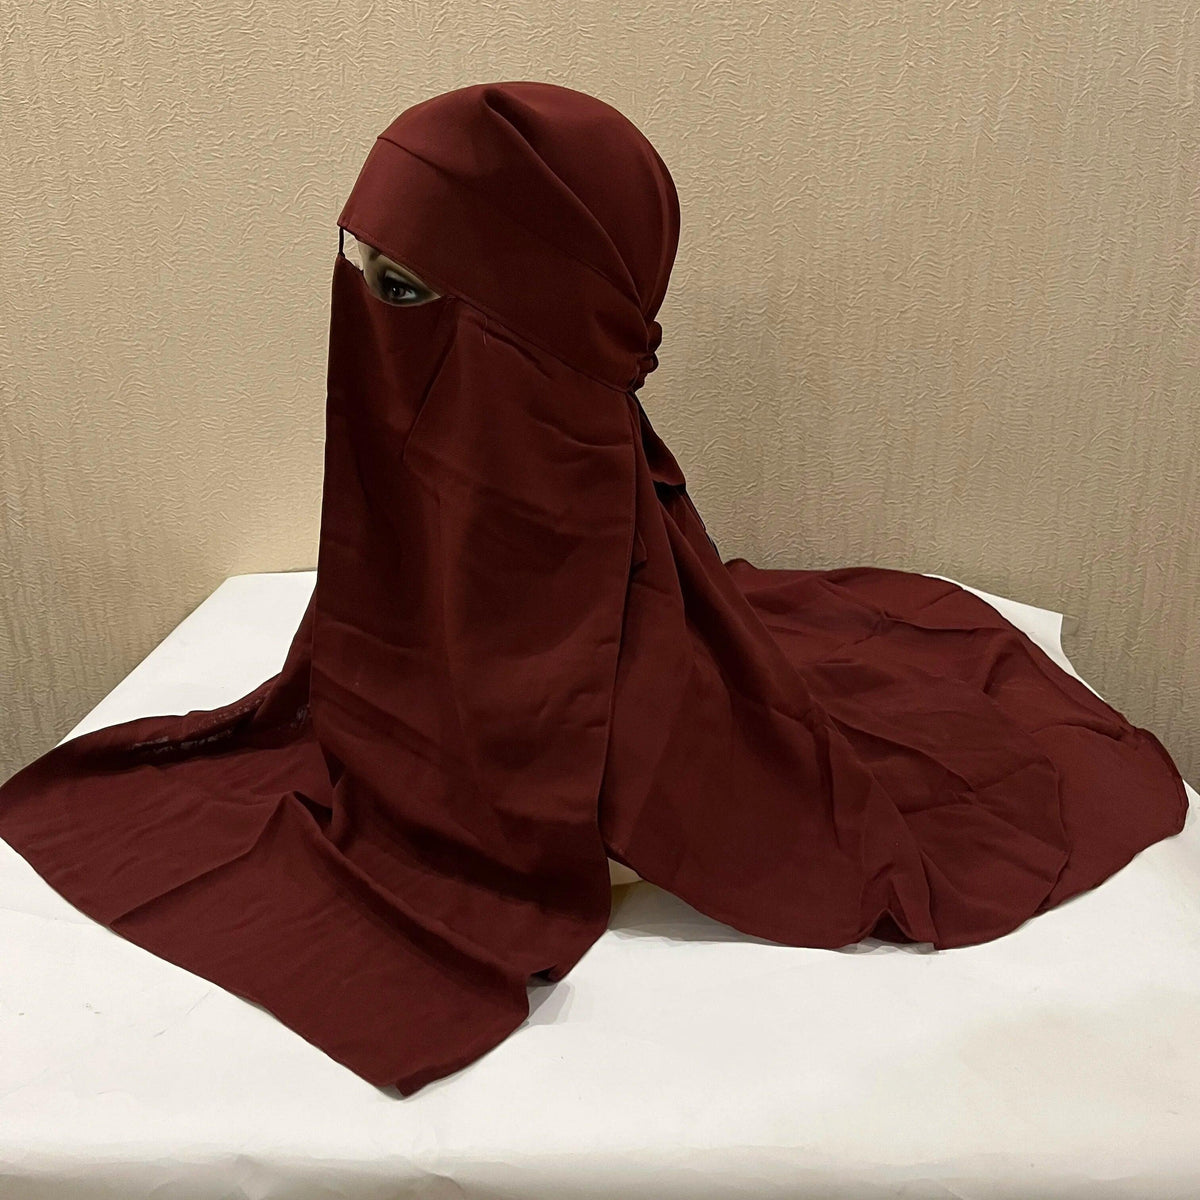 On sale - Chiffon Fabric Niqab - 7 Colour - Free shipping -